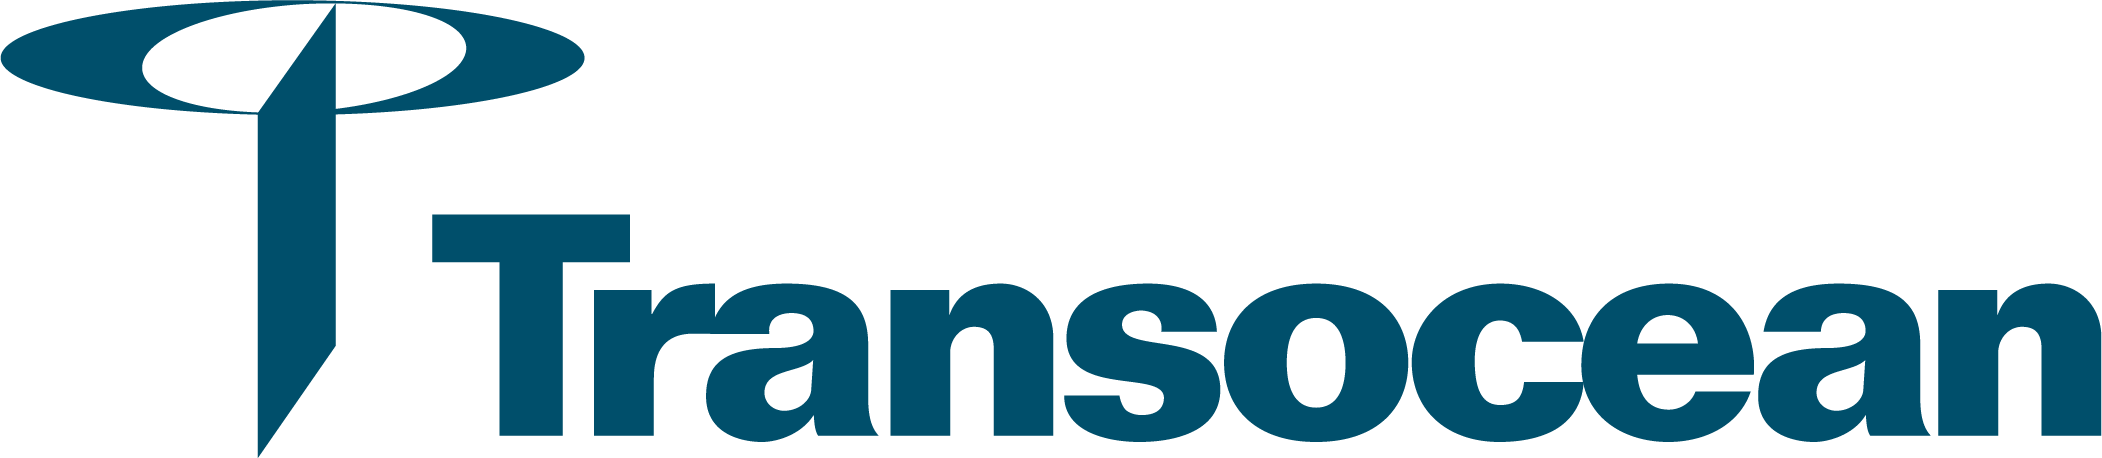 Transocean Logo_PMS 7708.png